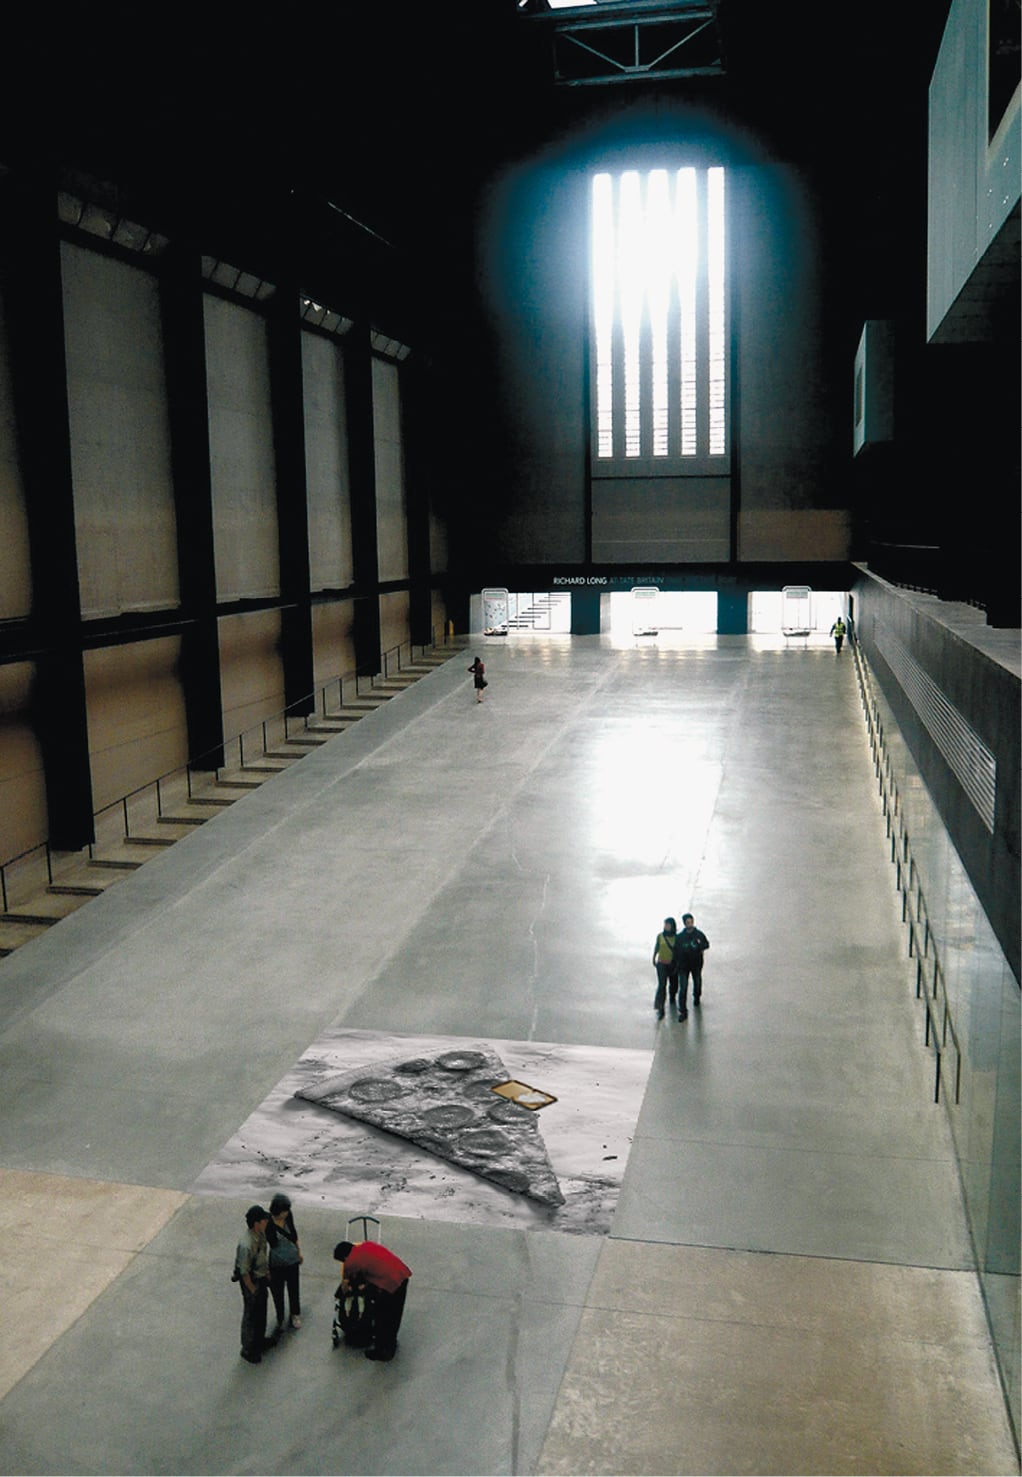 K48 Kontinuum, <em>The Last Slice</em>, Tate Modern Turbine Hall (digital sketch), 2010. Image courtesy Tate Modern / K48 Kontinuum.